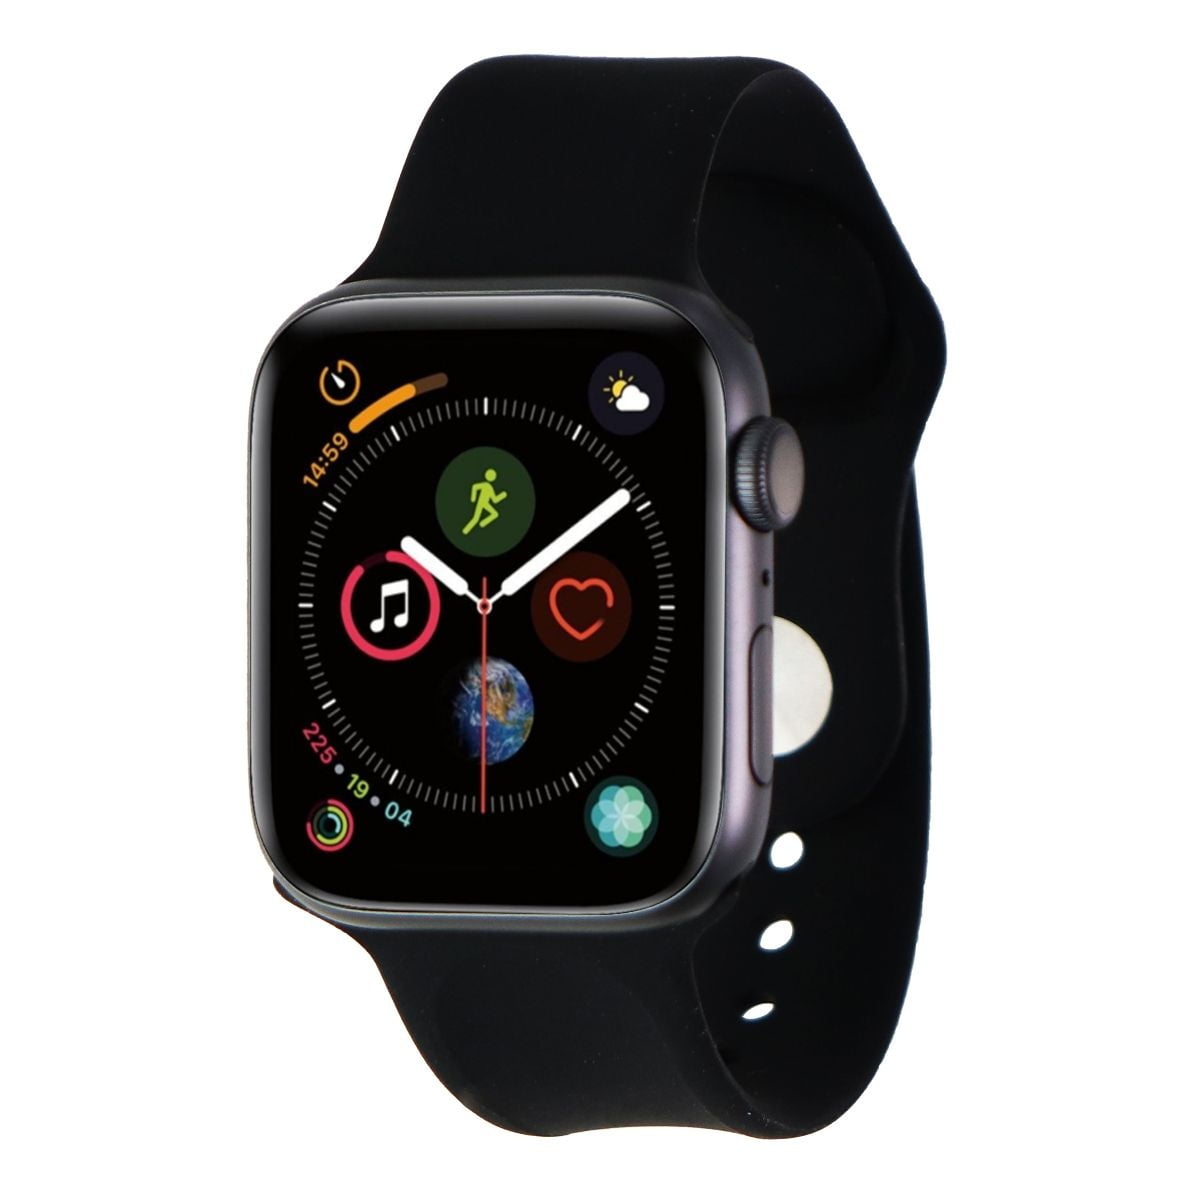 Venta > a1978 apple watch cellular > en stock